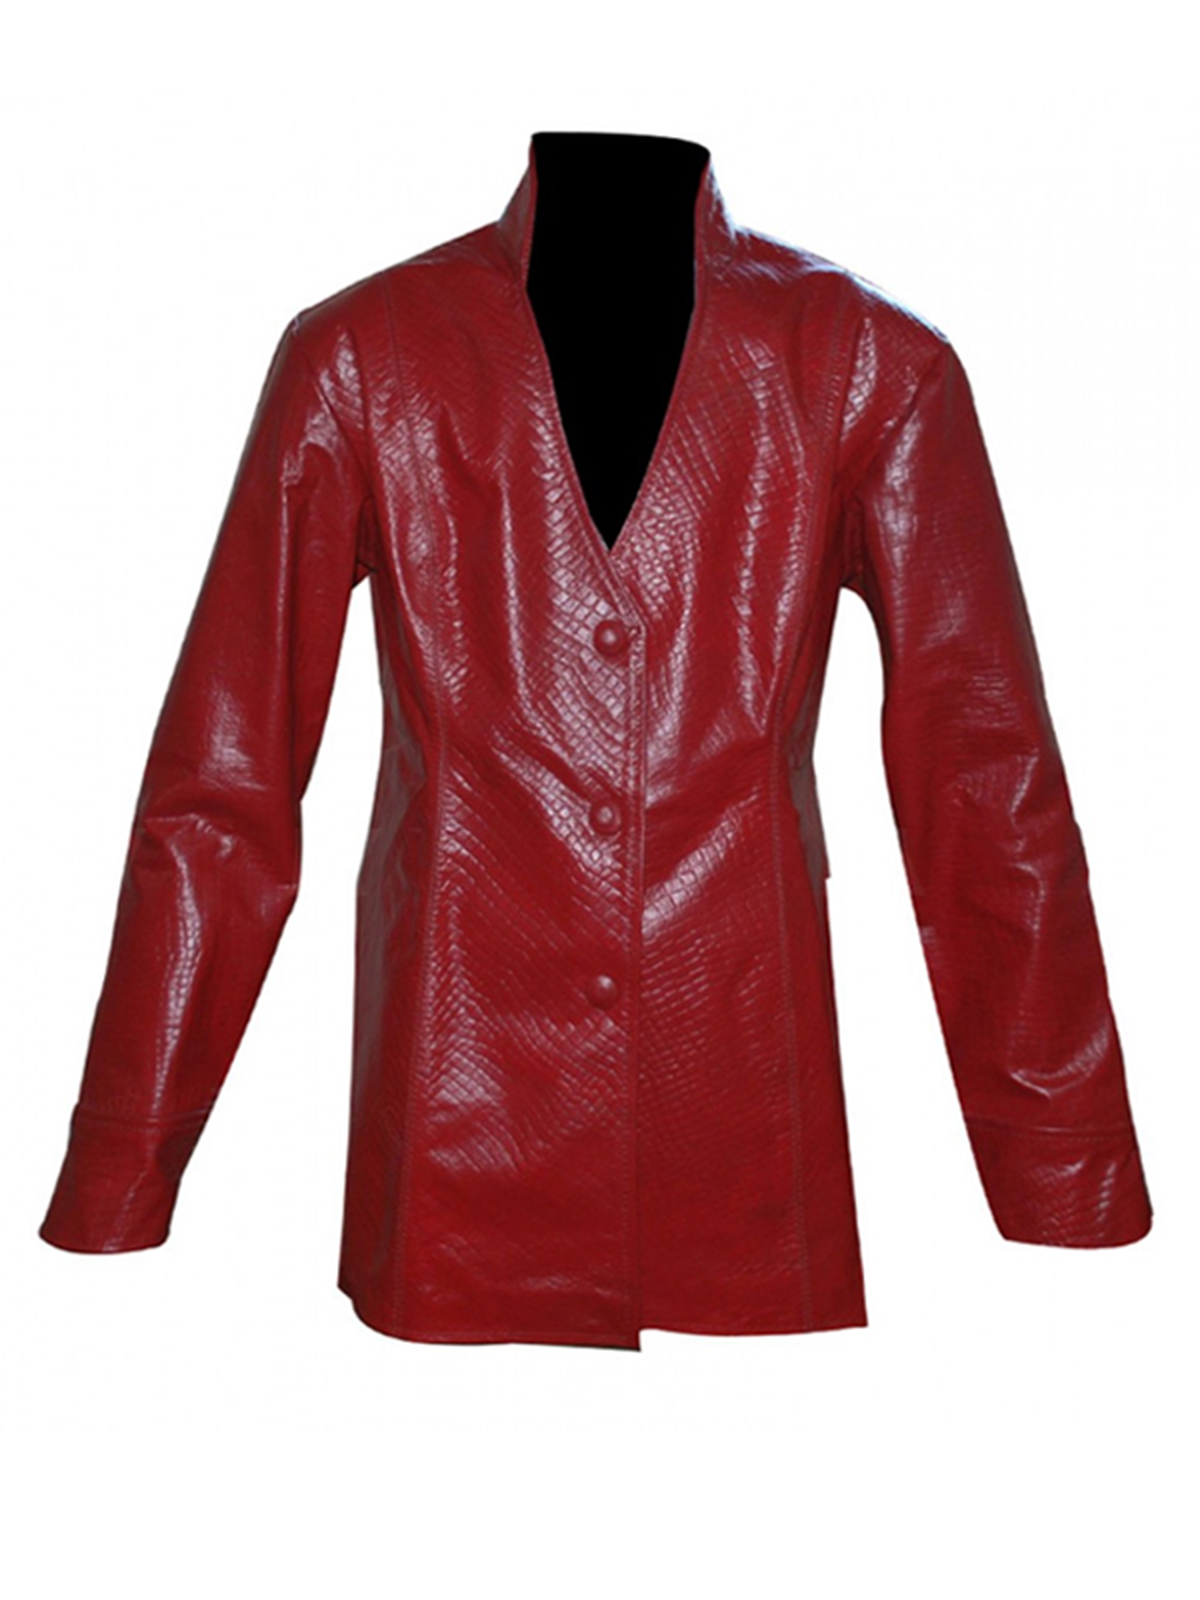 terminator 3 leather jacket